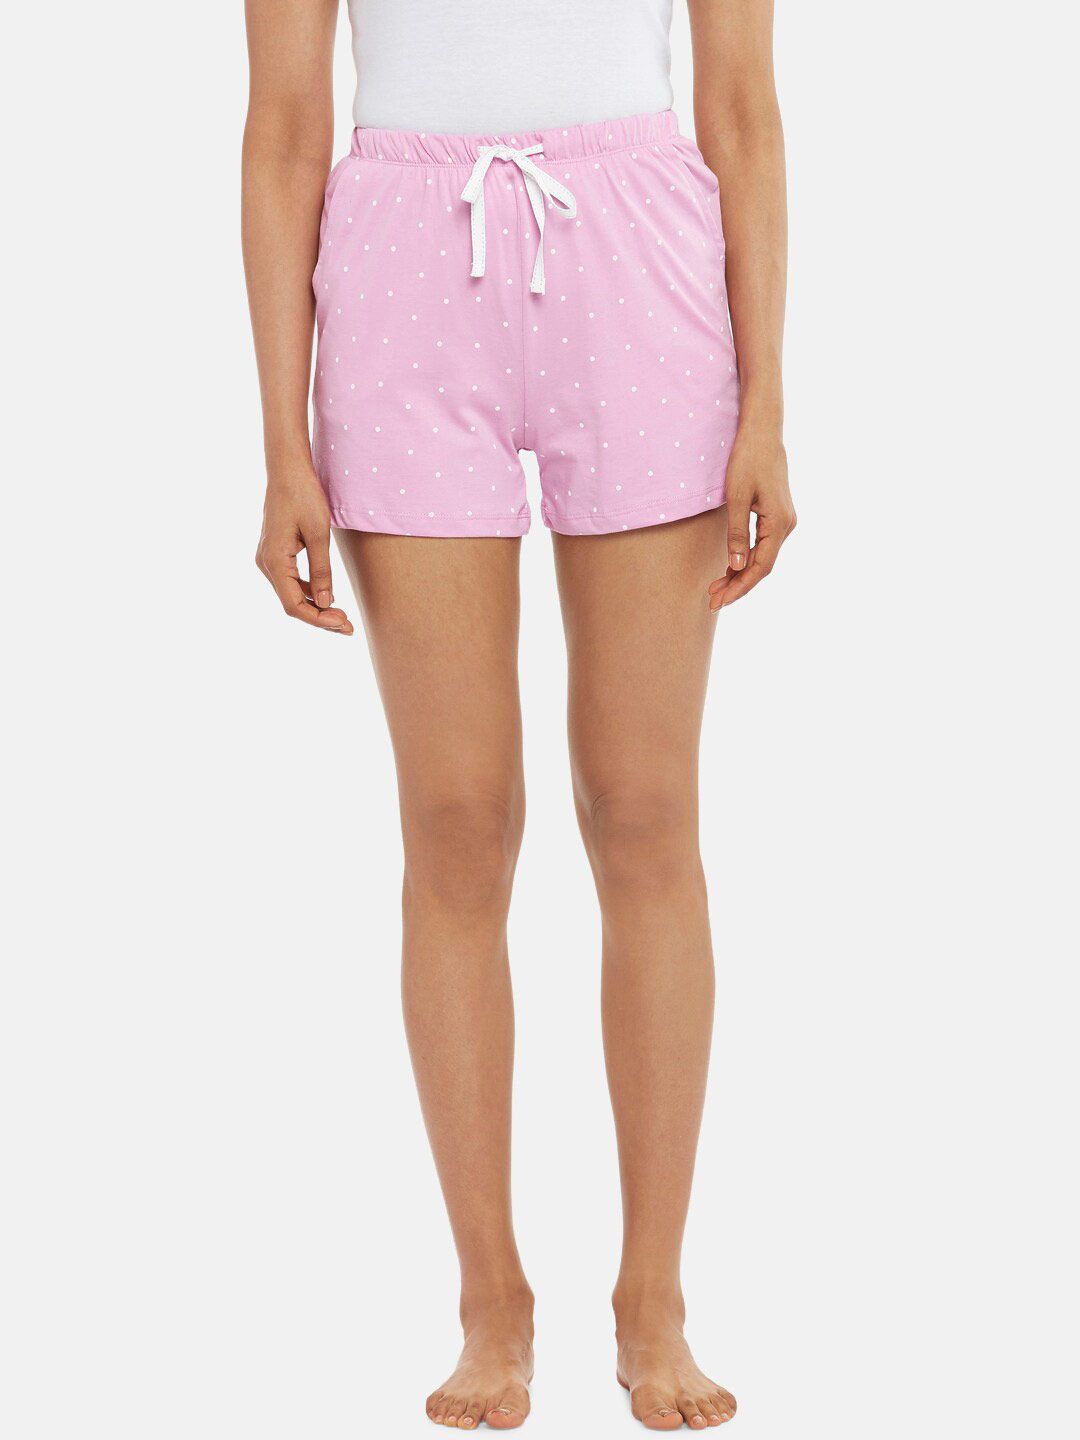 Dreamz by Pantaloons Women Pink & White Polka Dots Printed Lounge Shorts Price in India